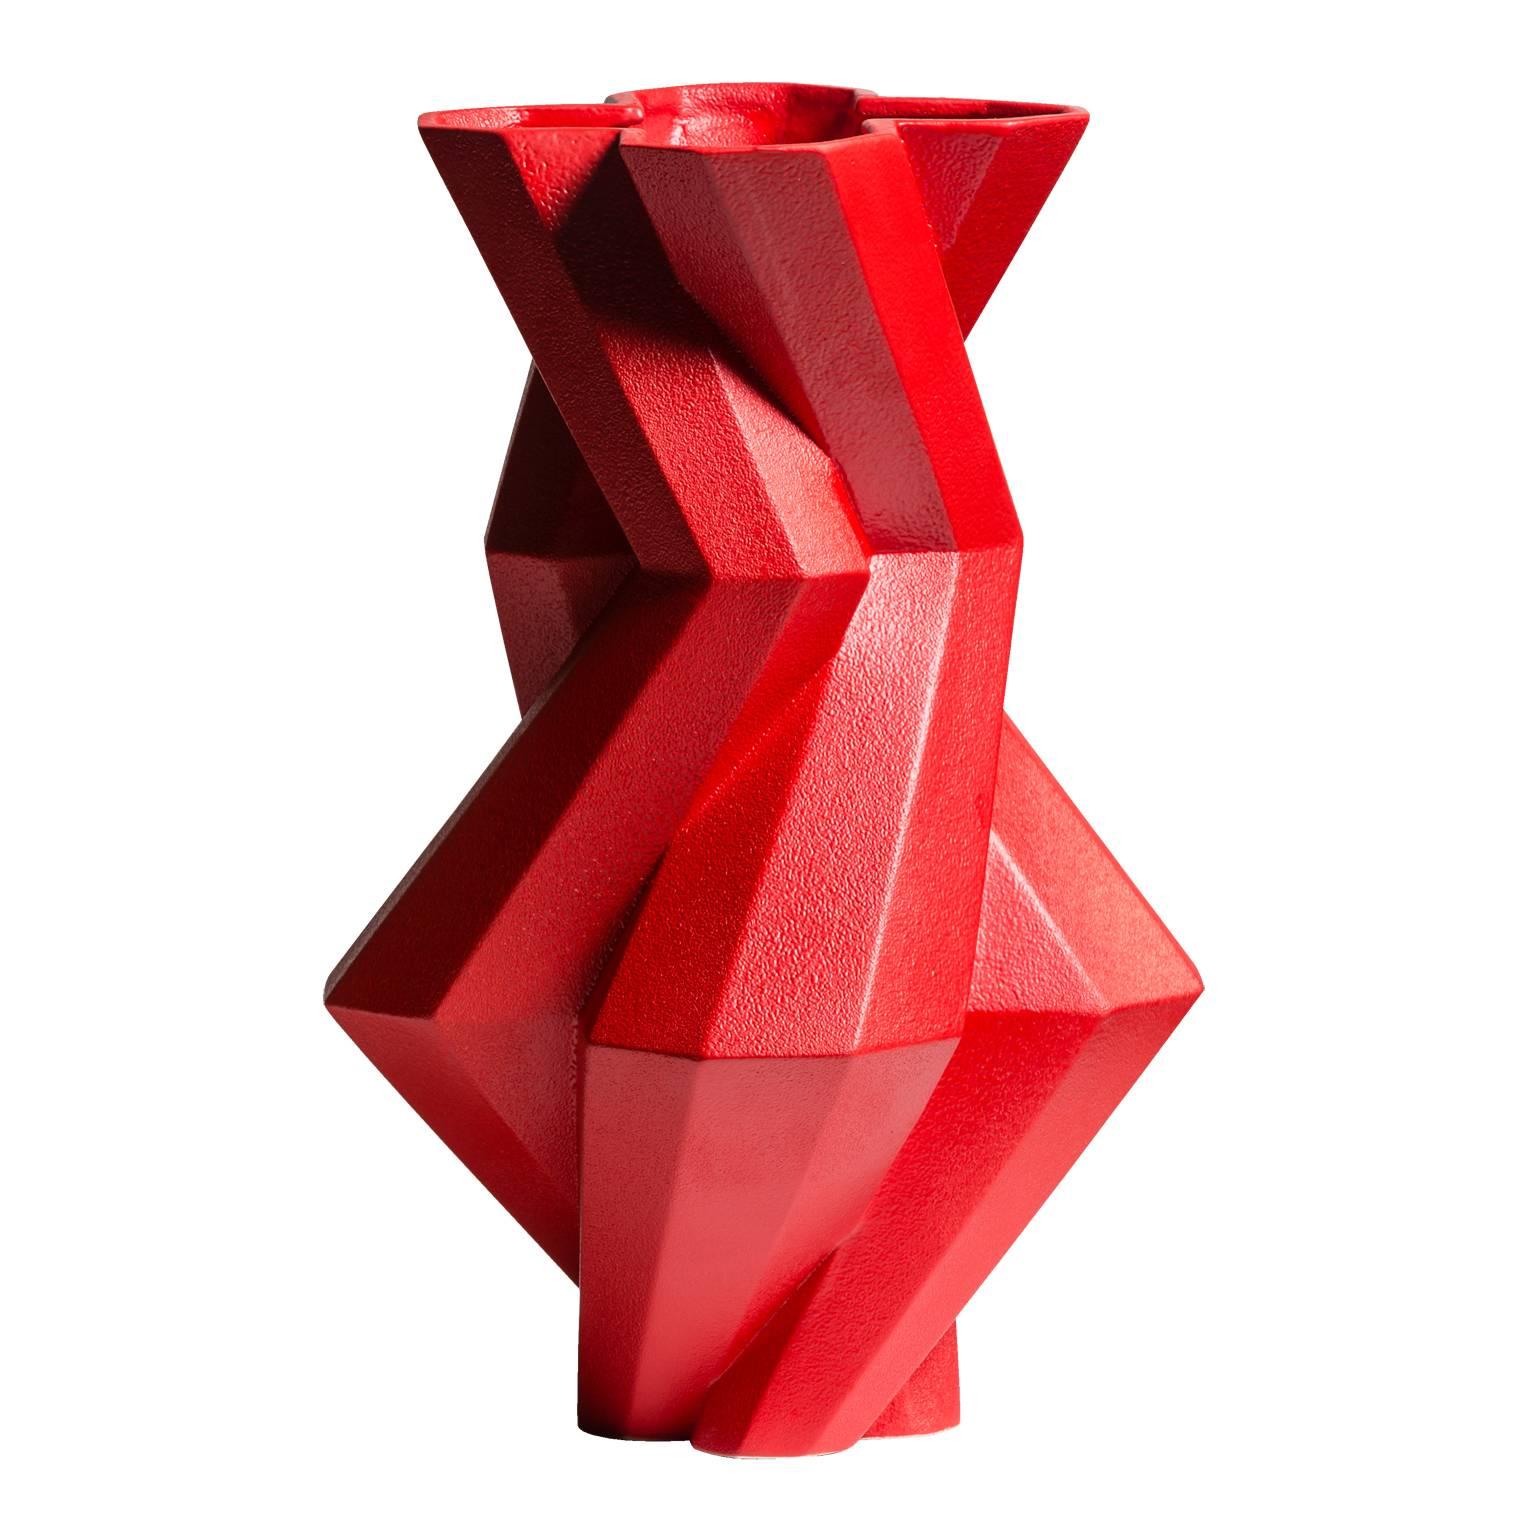 Fortress Castle Vase in Red Ceramic by Lara Bohinc